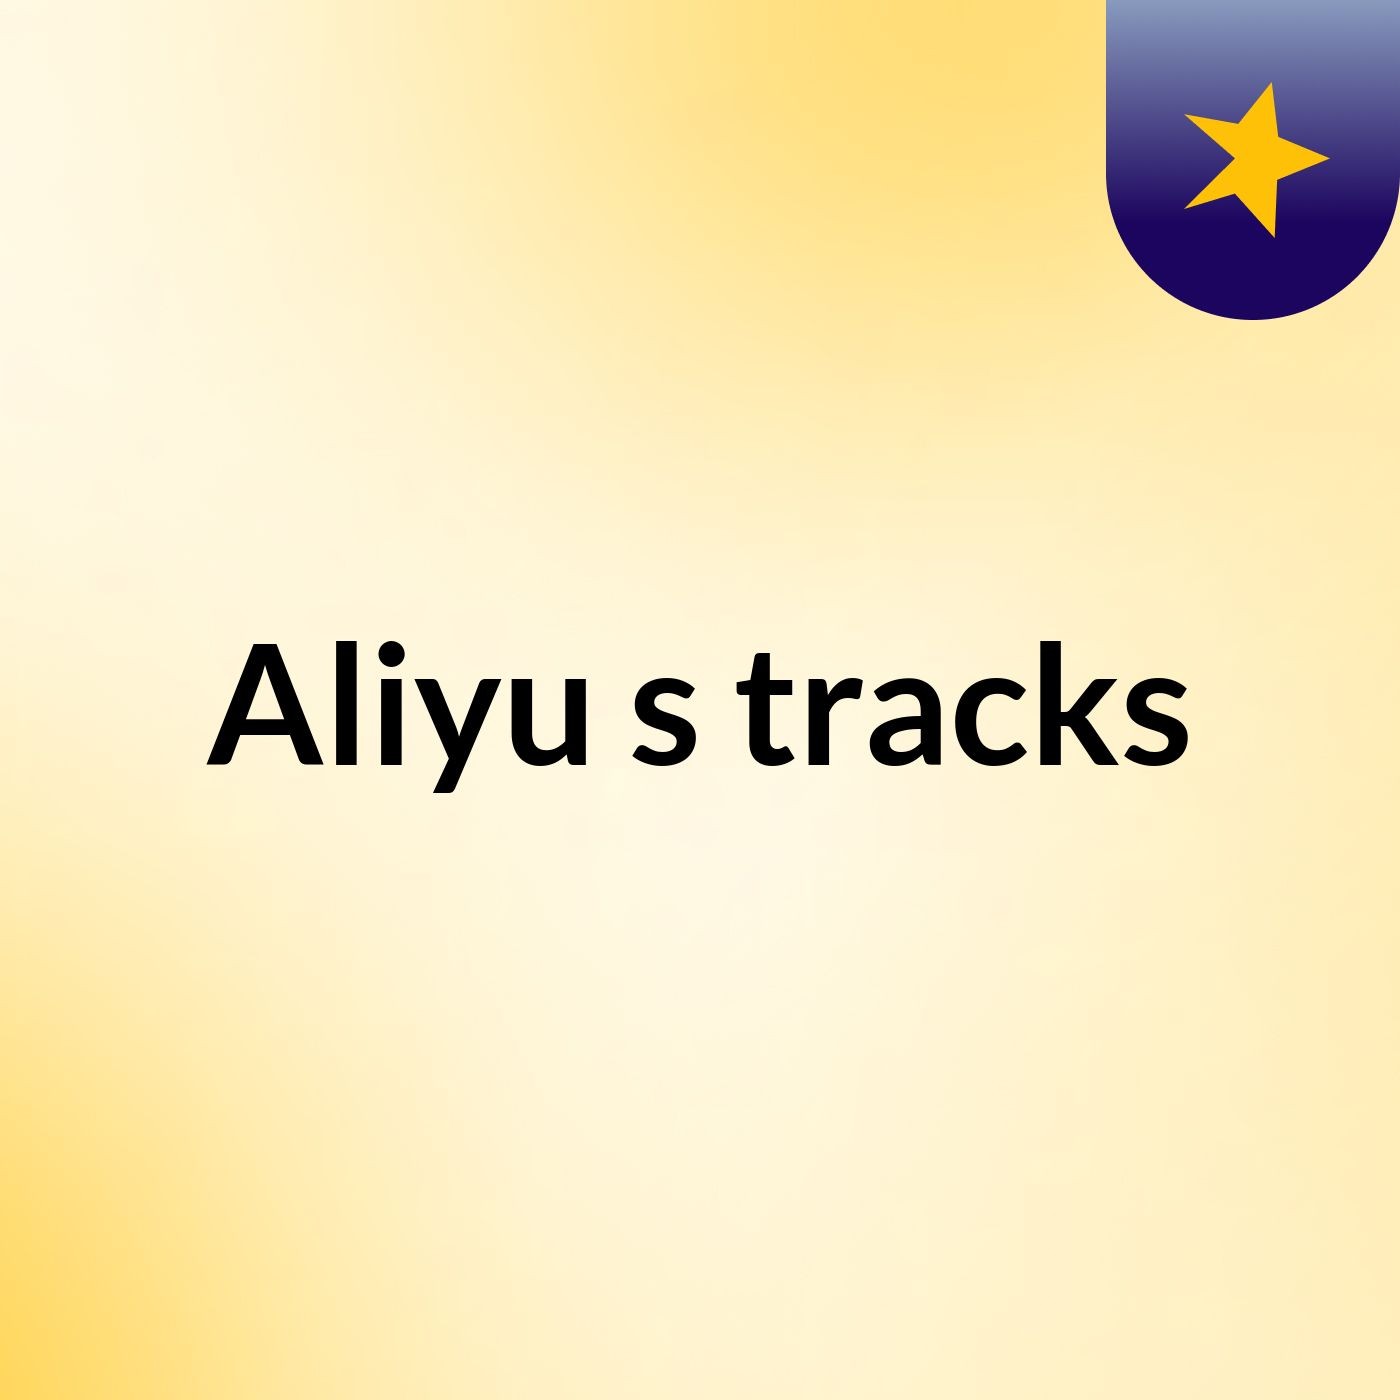 Aliyu's tracks